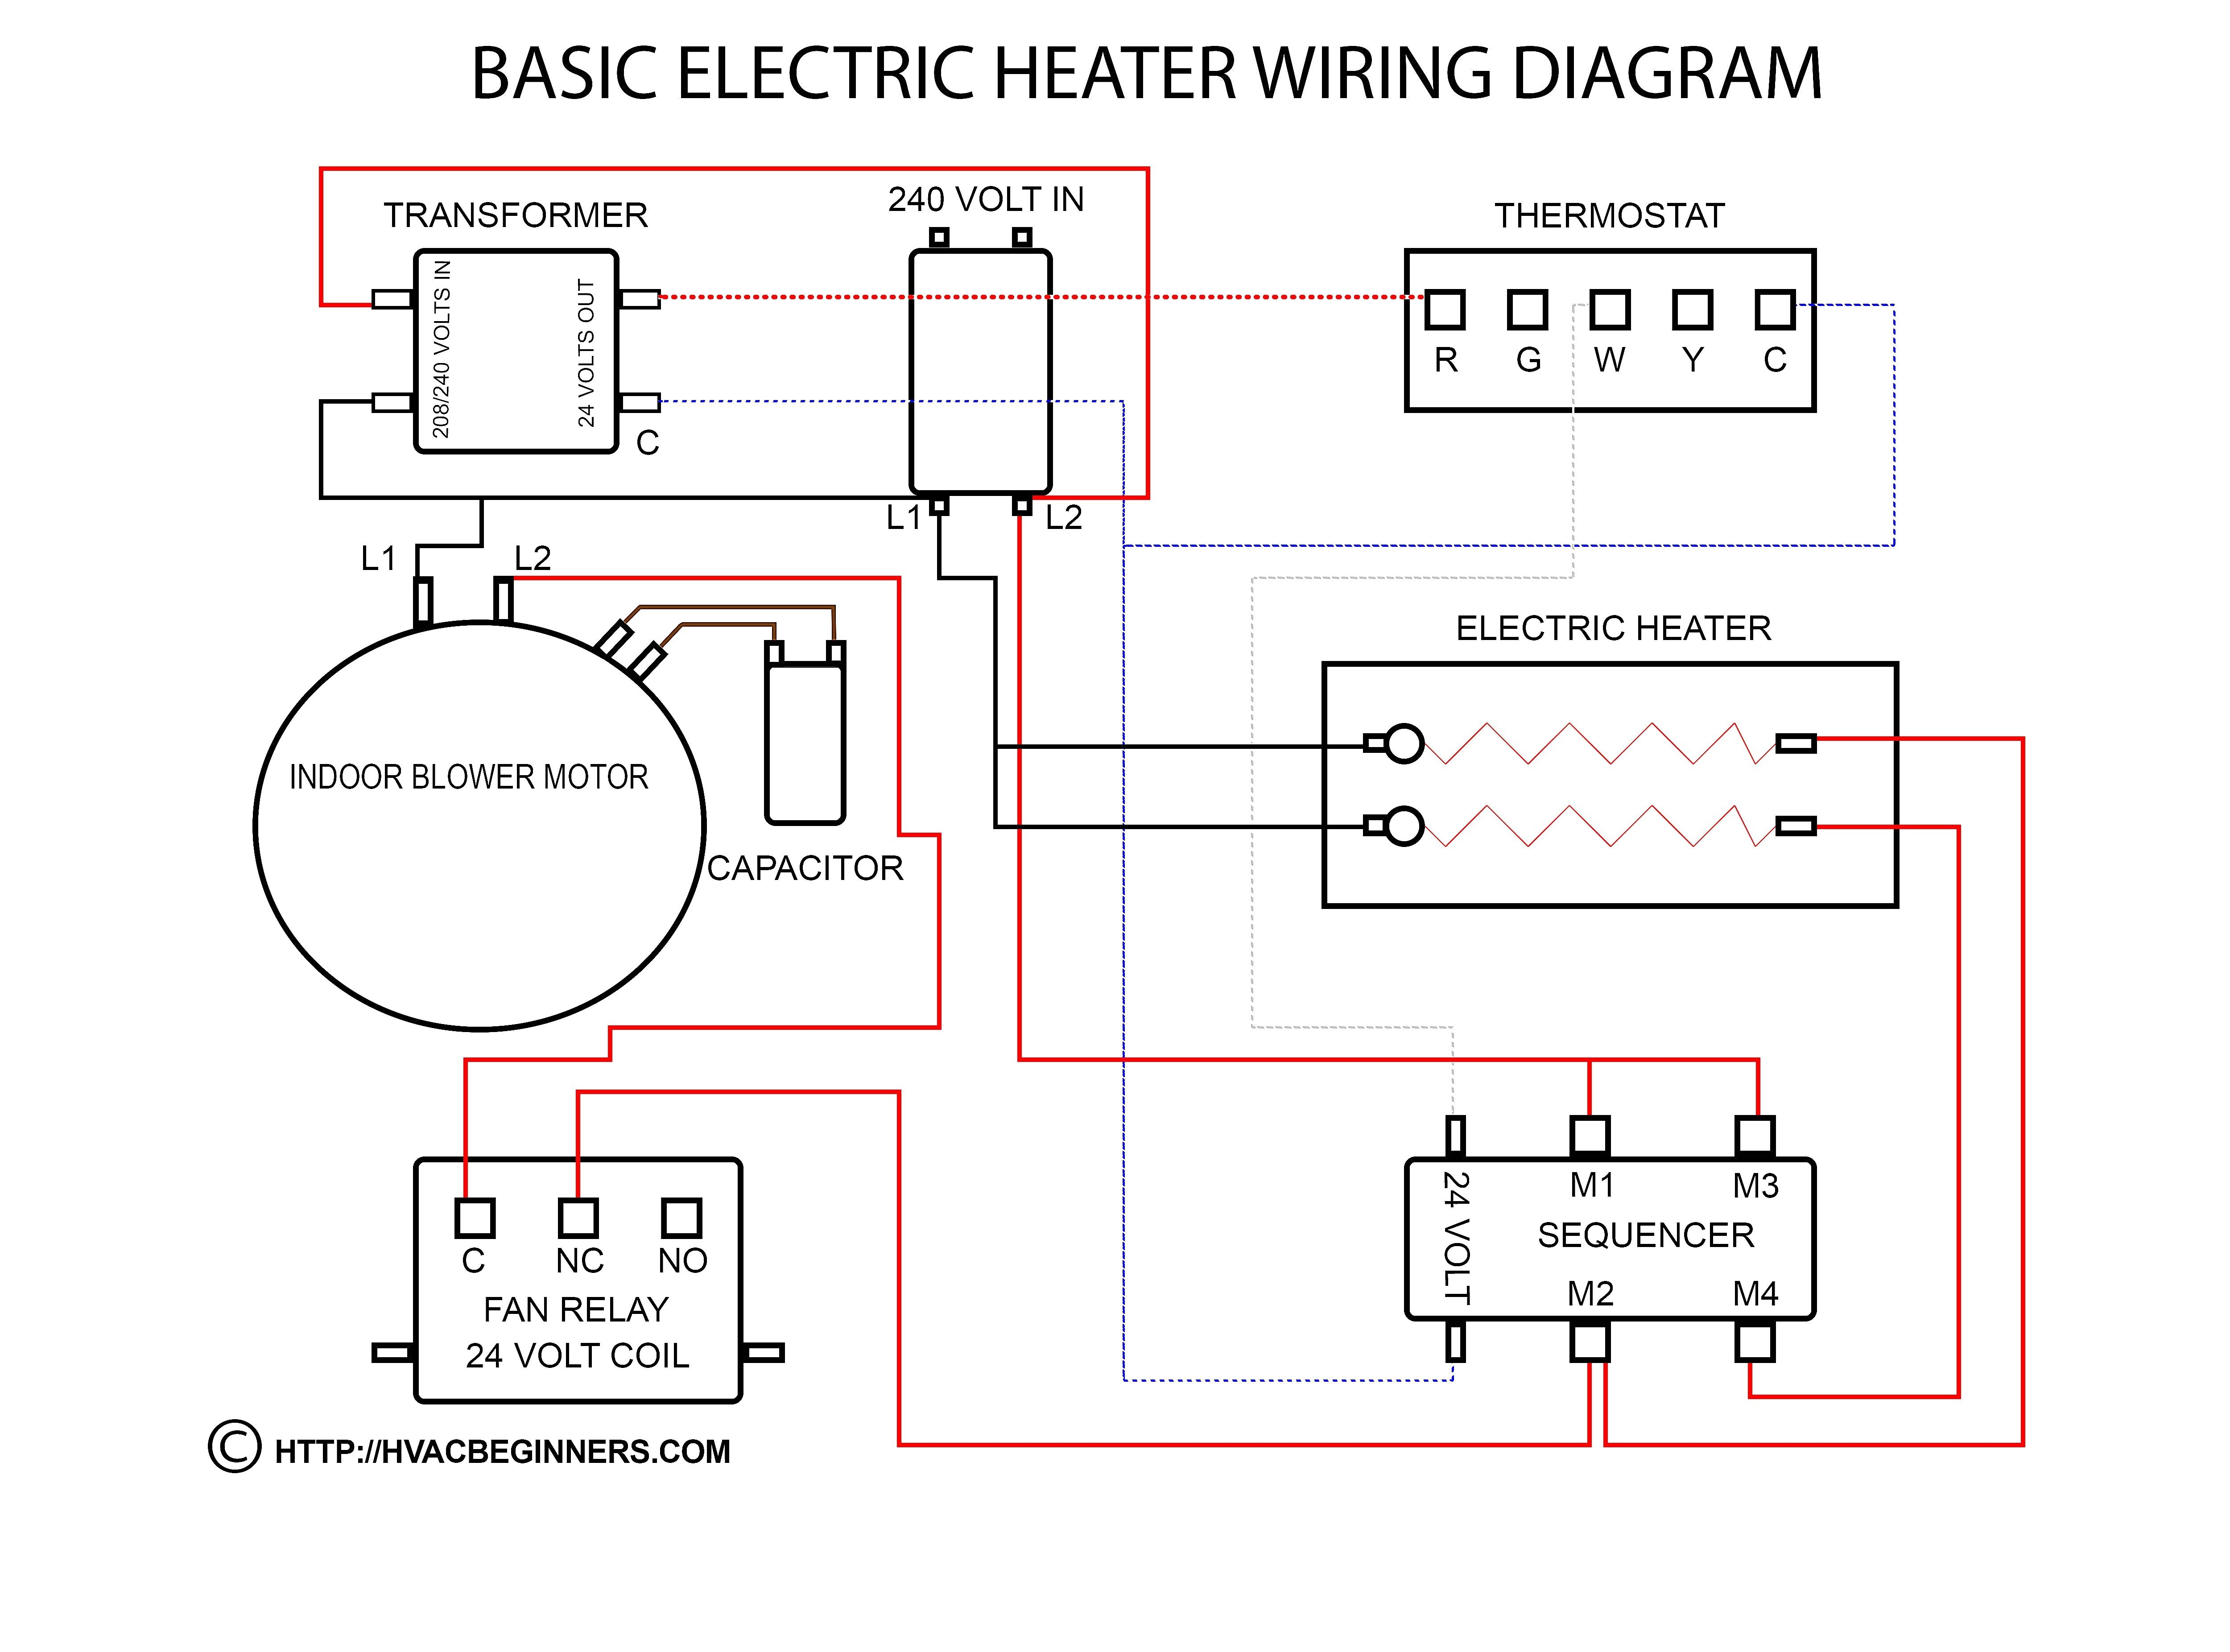 Wiring A Ac thermostat Diagram New Hvac Wiring Diagram Best Wiring Diagram for thermostat – Wire